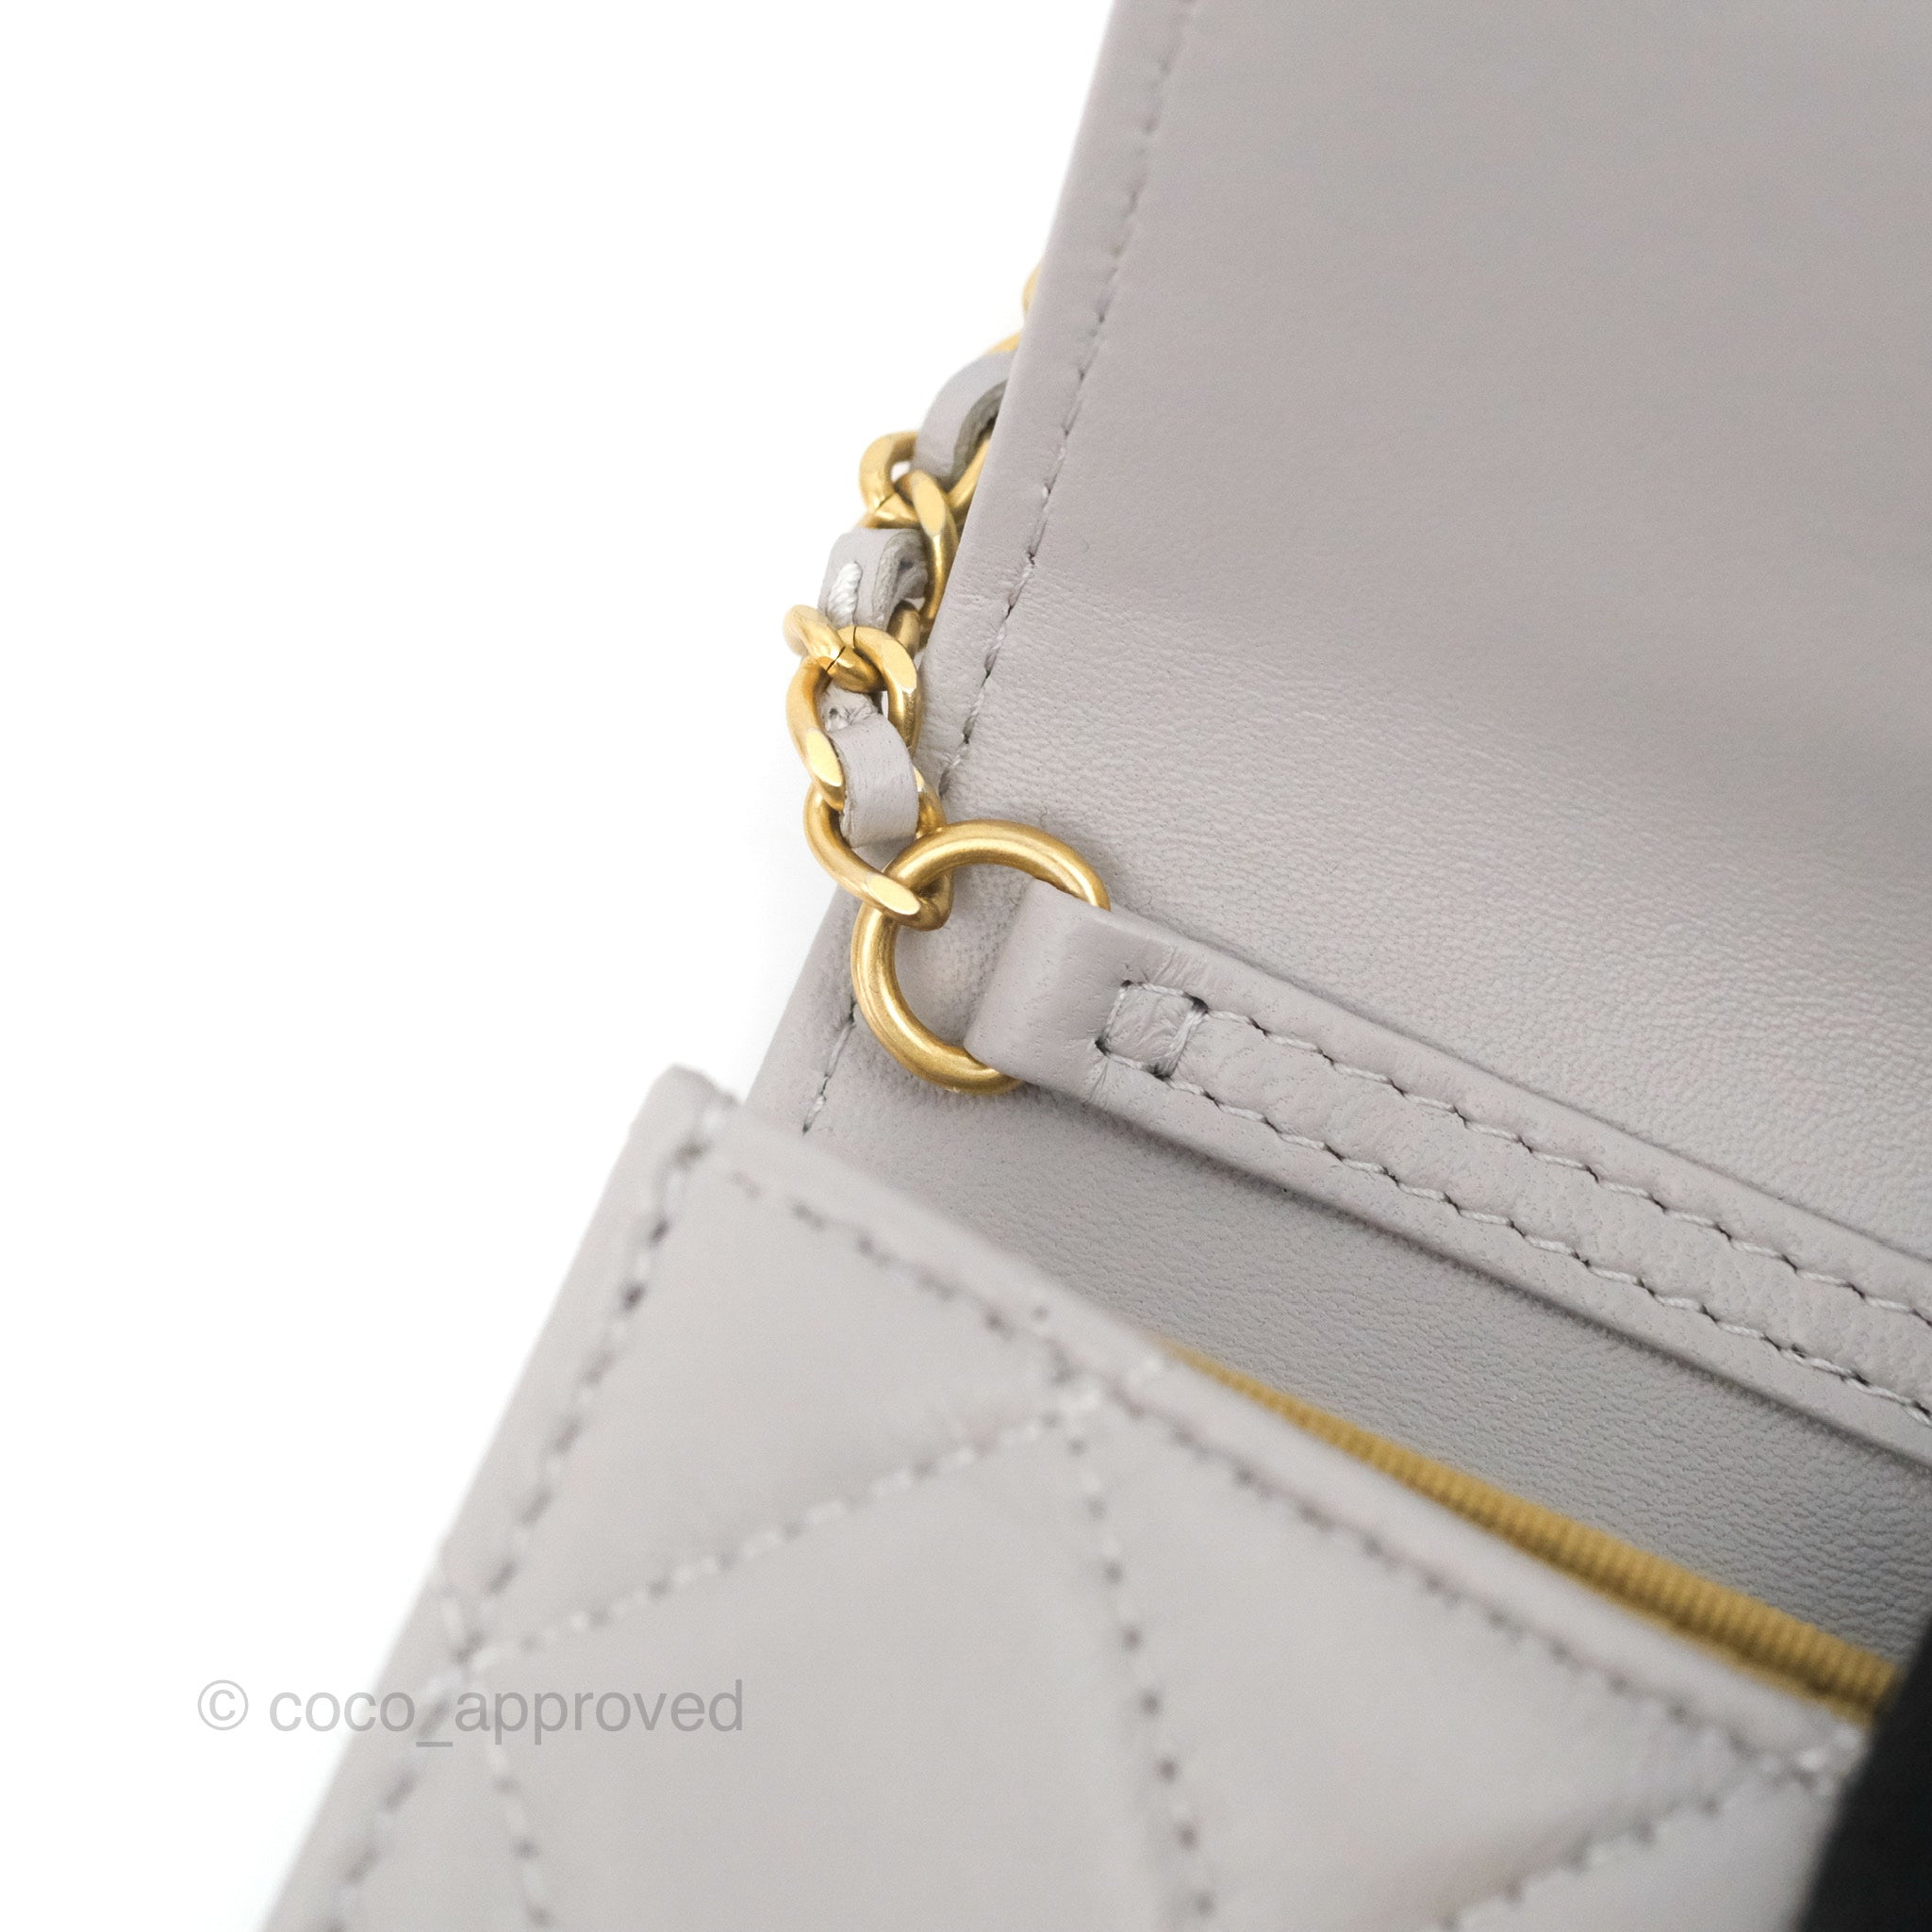 chanel white handbag